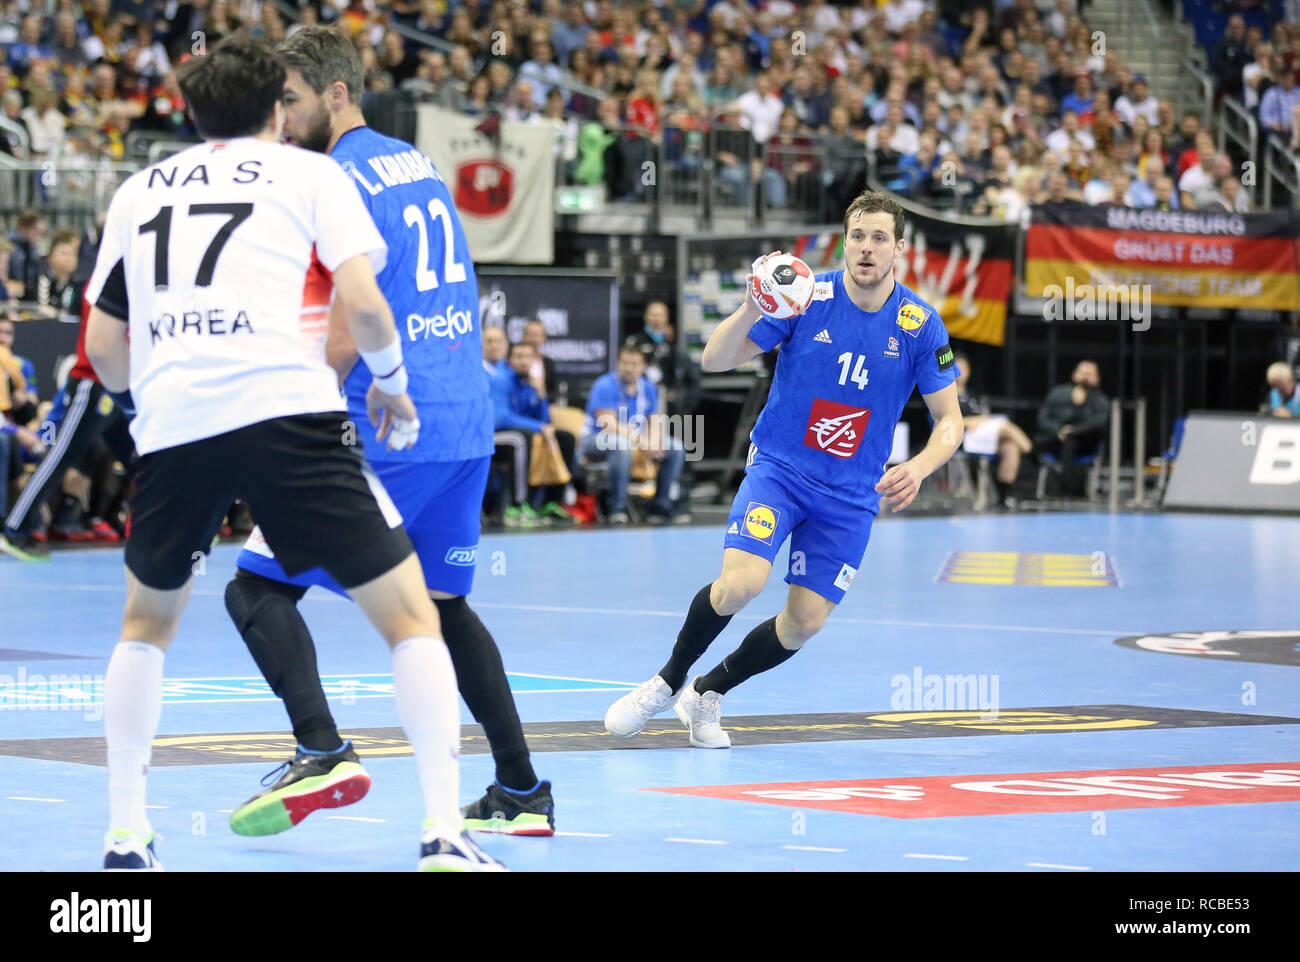 Berlin, Germany. 14th Jan, 2019. Handball IHF Men's World Championship: Kentin Mahe for France progresses towards the Korea's goal line Credit: Mickael Chavet/Alamy Live News Stock Photo